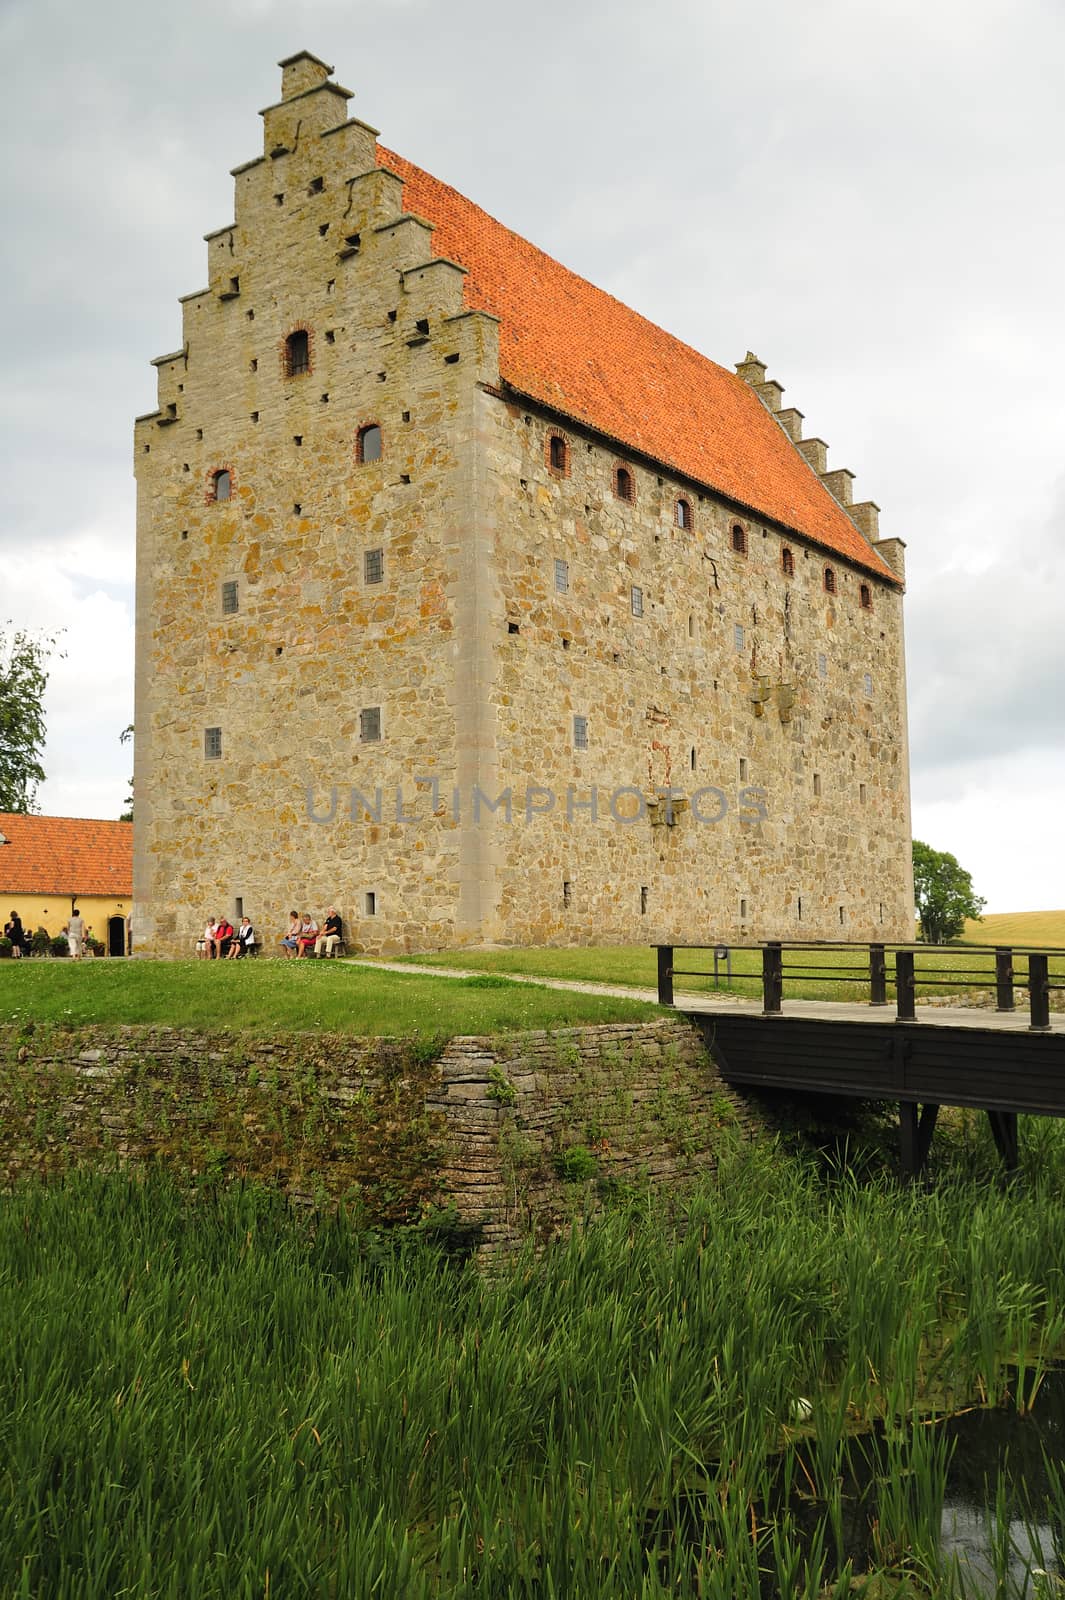 The medieval glimmingehus castle in the skane region of Sweden.